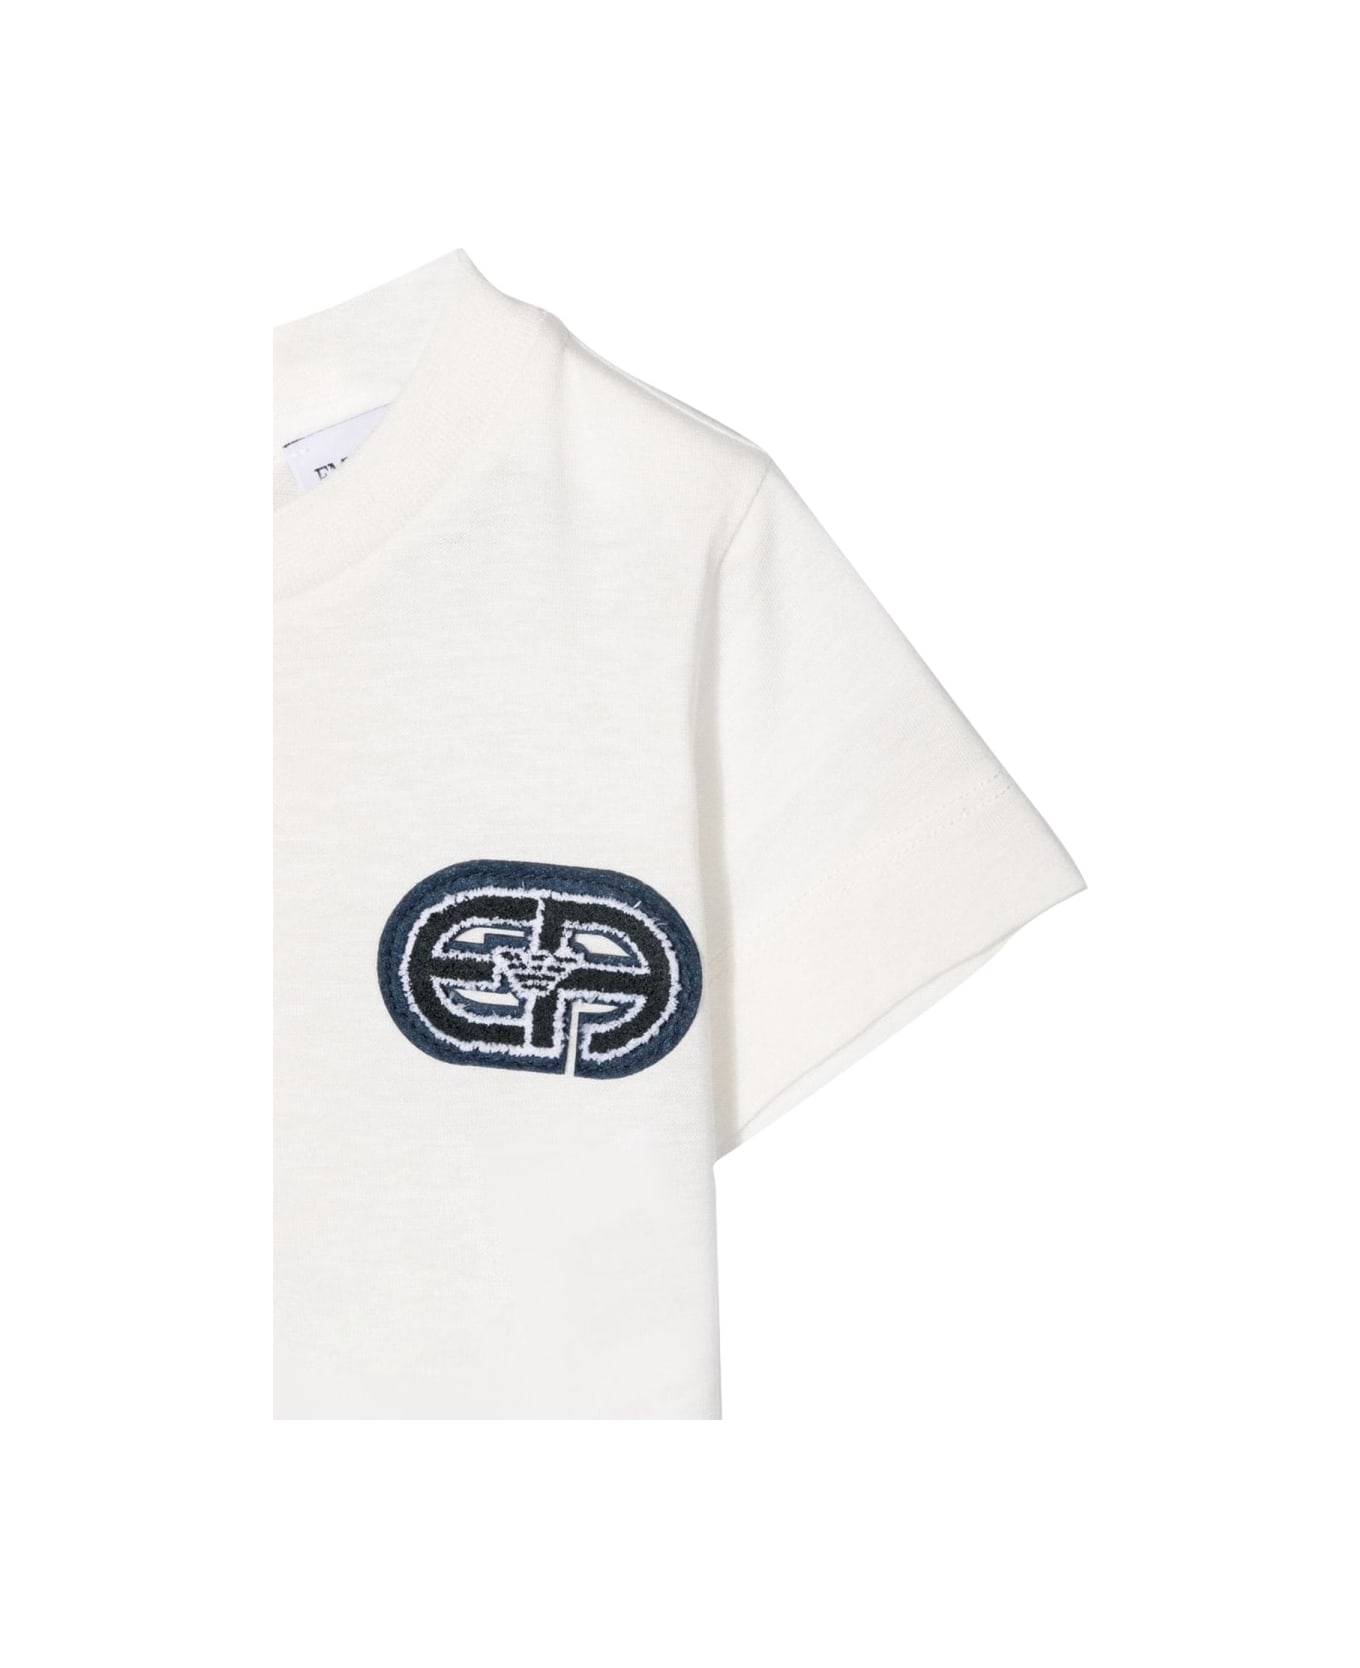 Emporio Armani T-shirt - WHITE